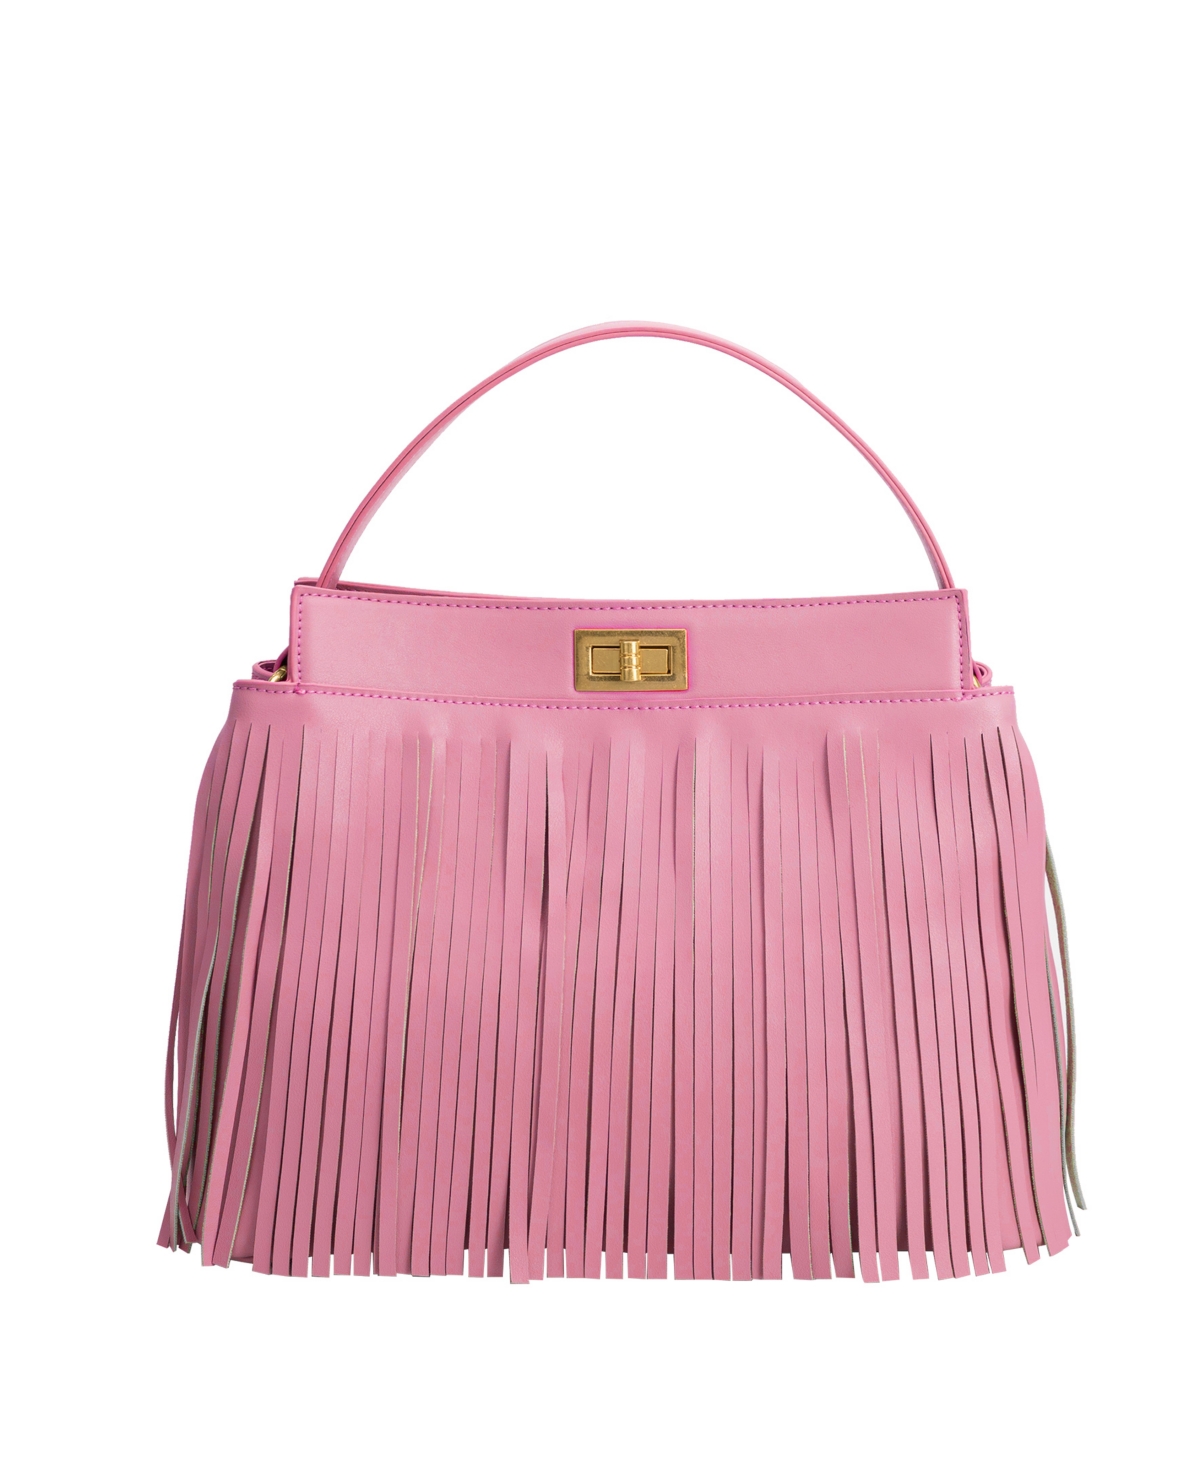 Melie Bianco Women's Anne Top Handle Bag In Pink